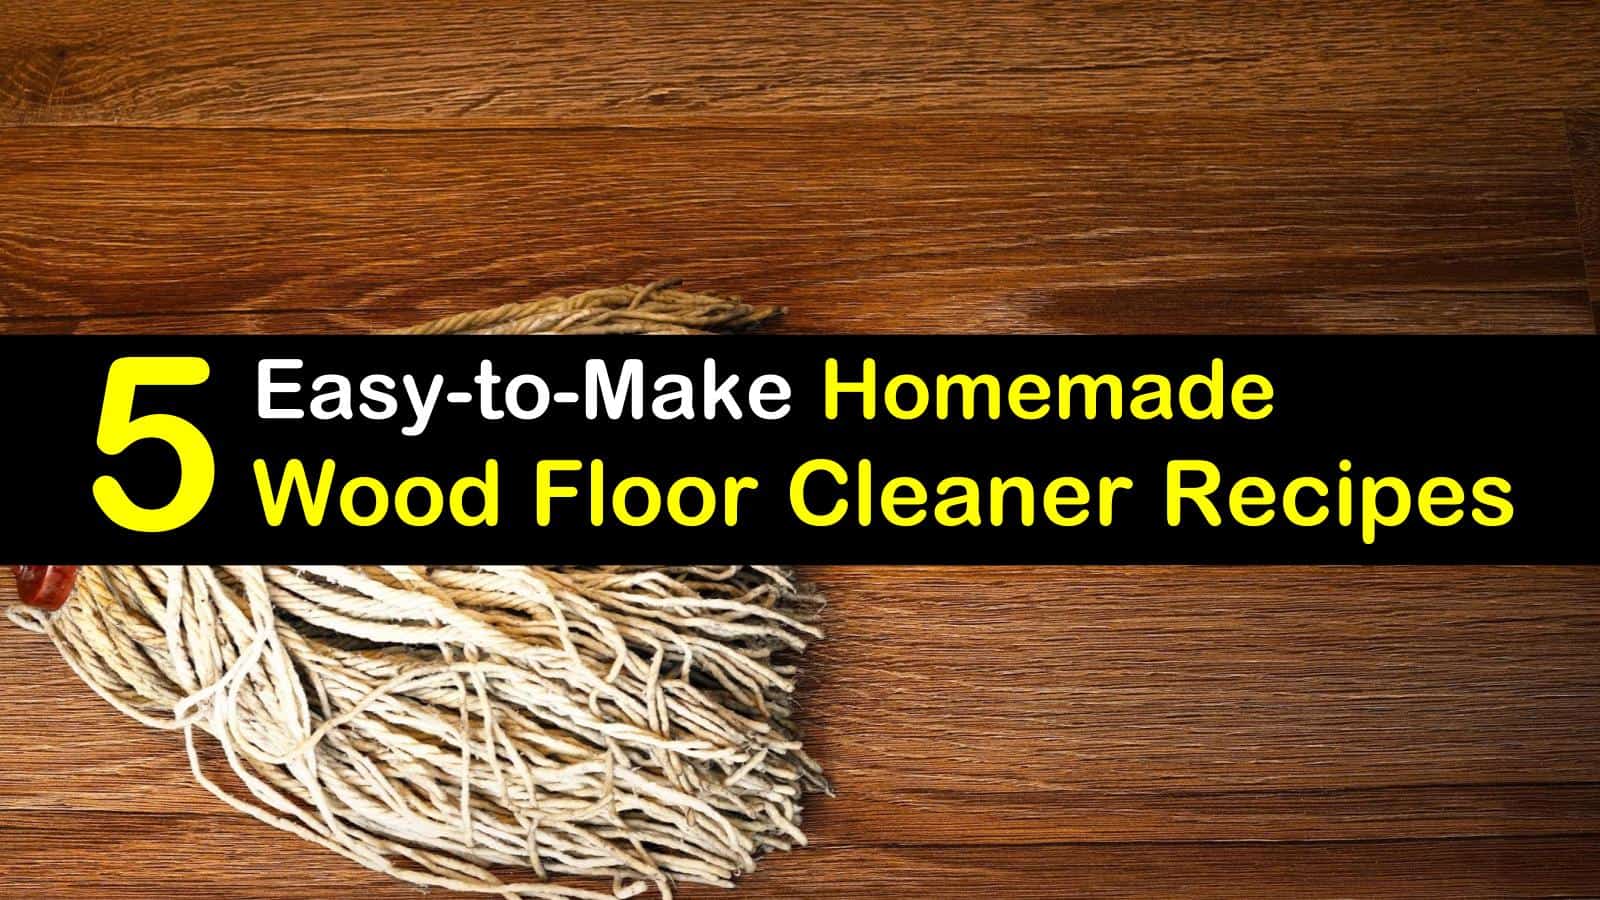 Homemade Wood Floor Cleaner Recipes, Best Hardwood Floor Cleaner To Remove Residue